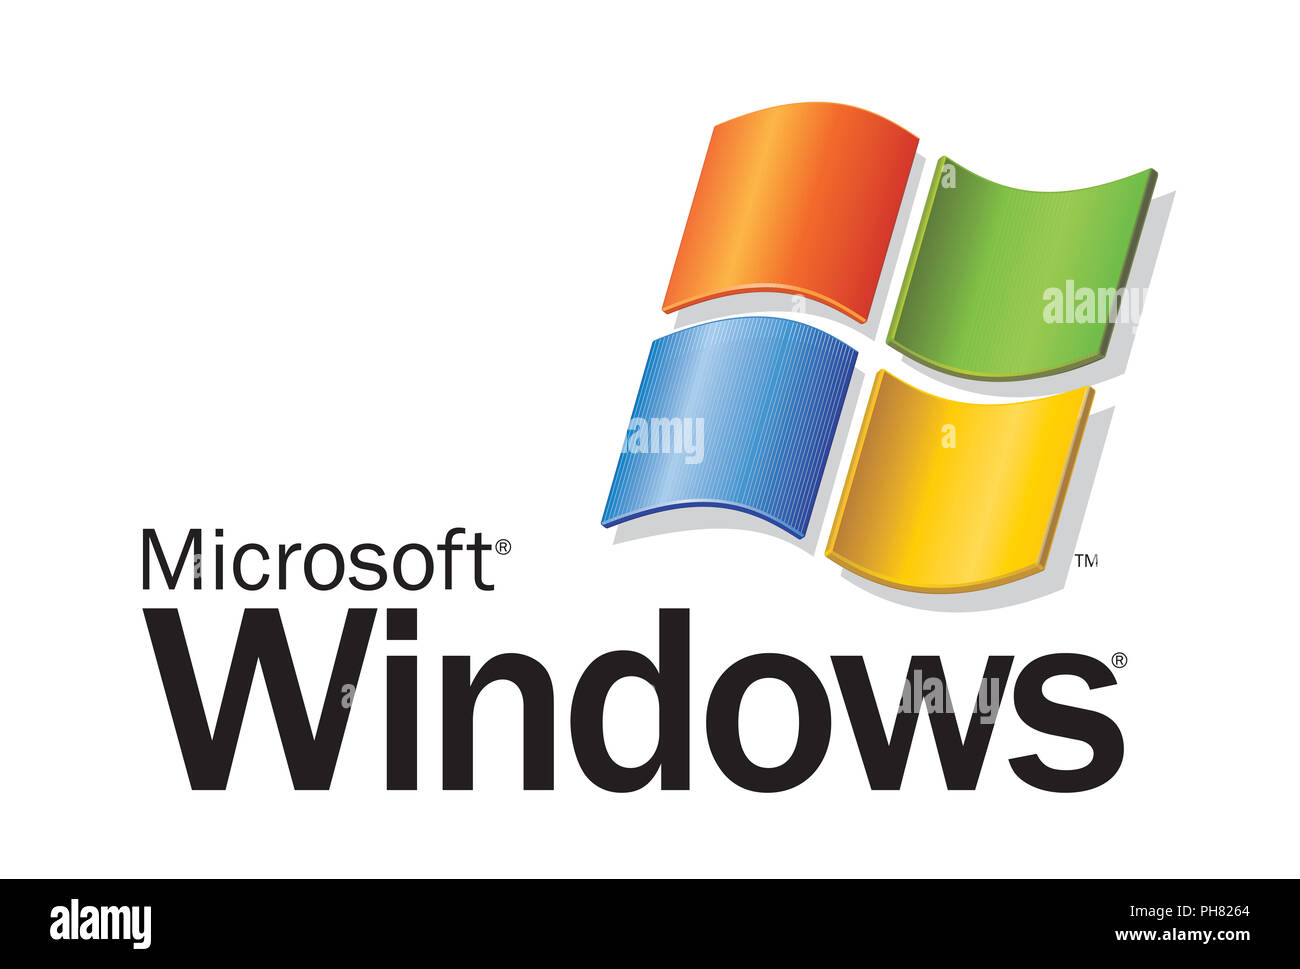 Microsoft Windows logo illustration emblem Stock Photo - Alamy